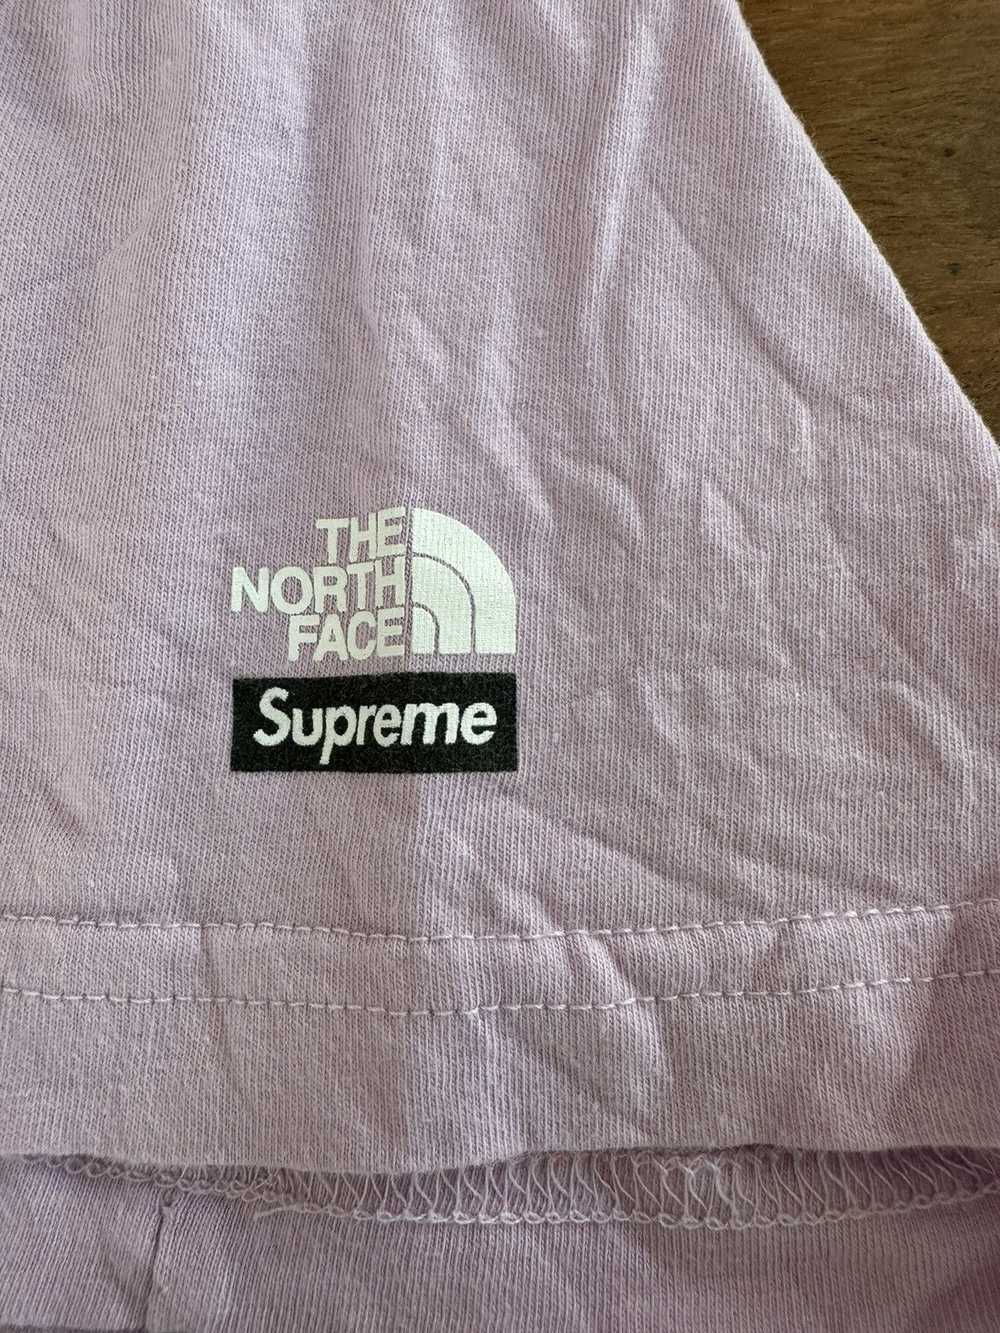 Supreme × The North Face Supreme TNF Sketch Tee - image 3